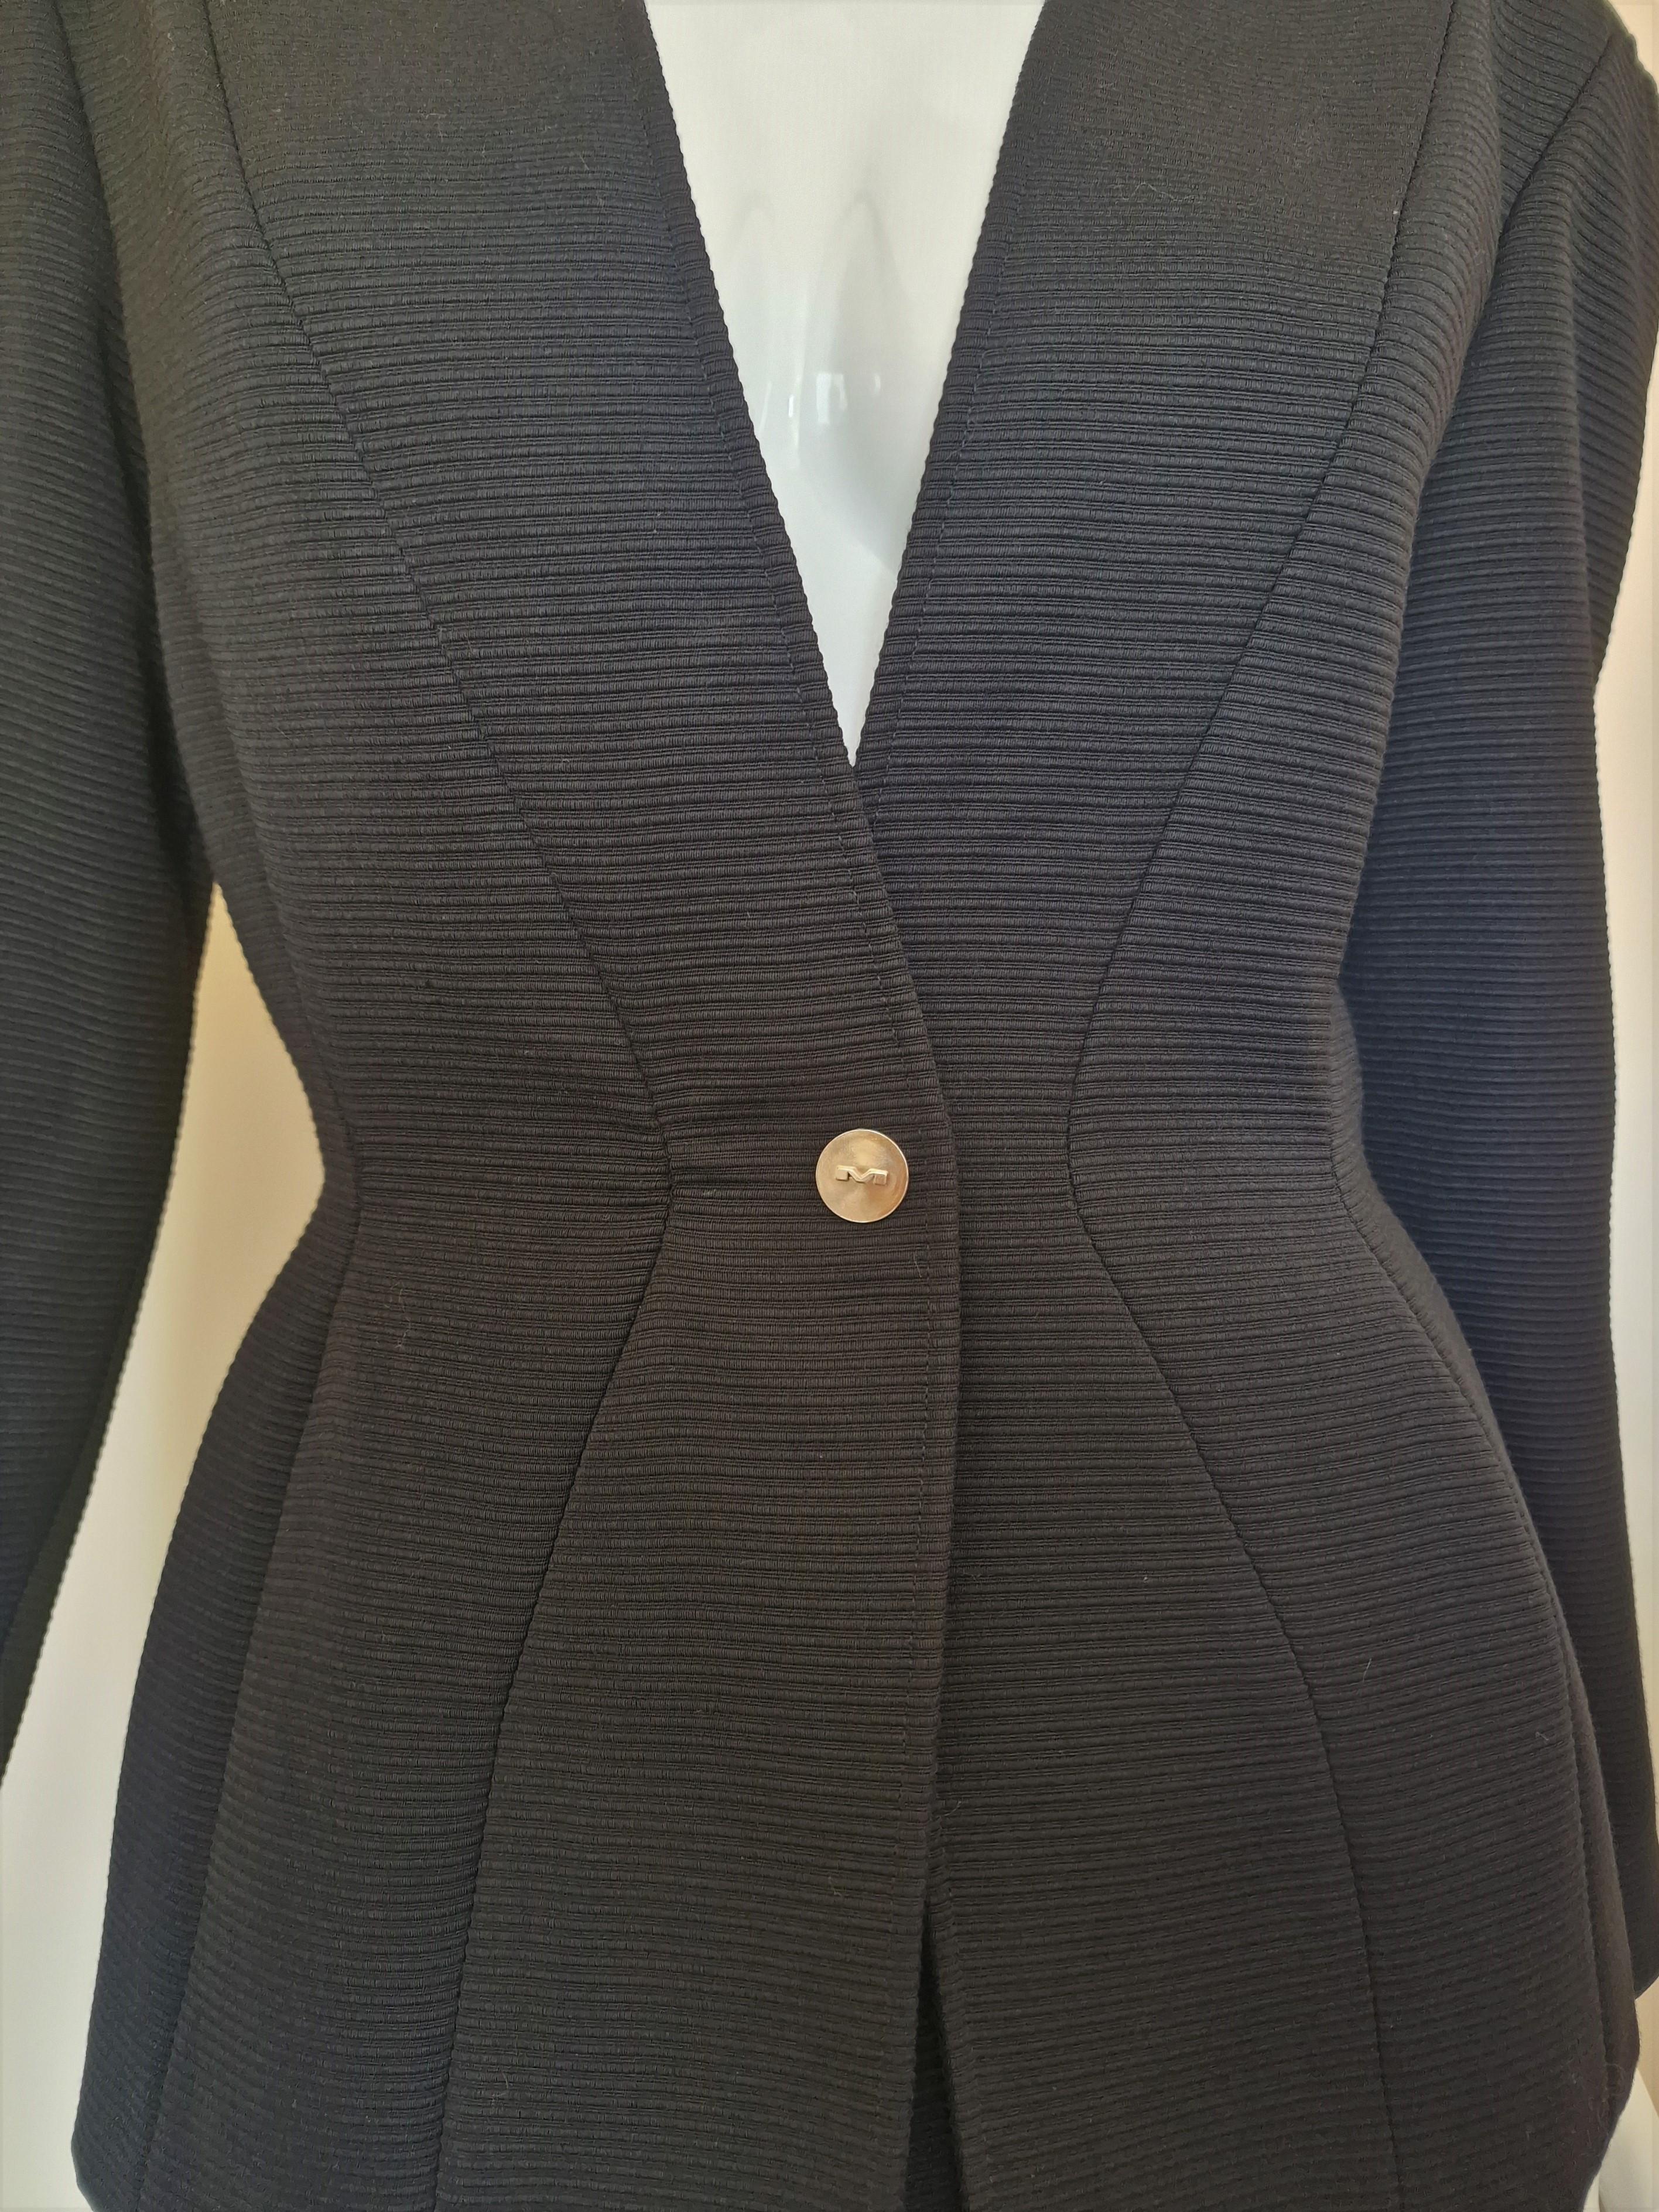 Thierry Mugler Bee Wasp Waist Black Couture Medium Ensemble Blazer Skirt Suit 2